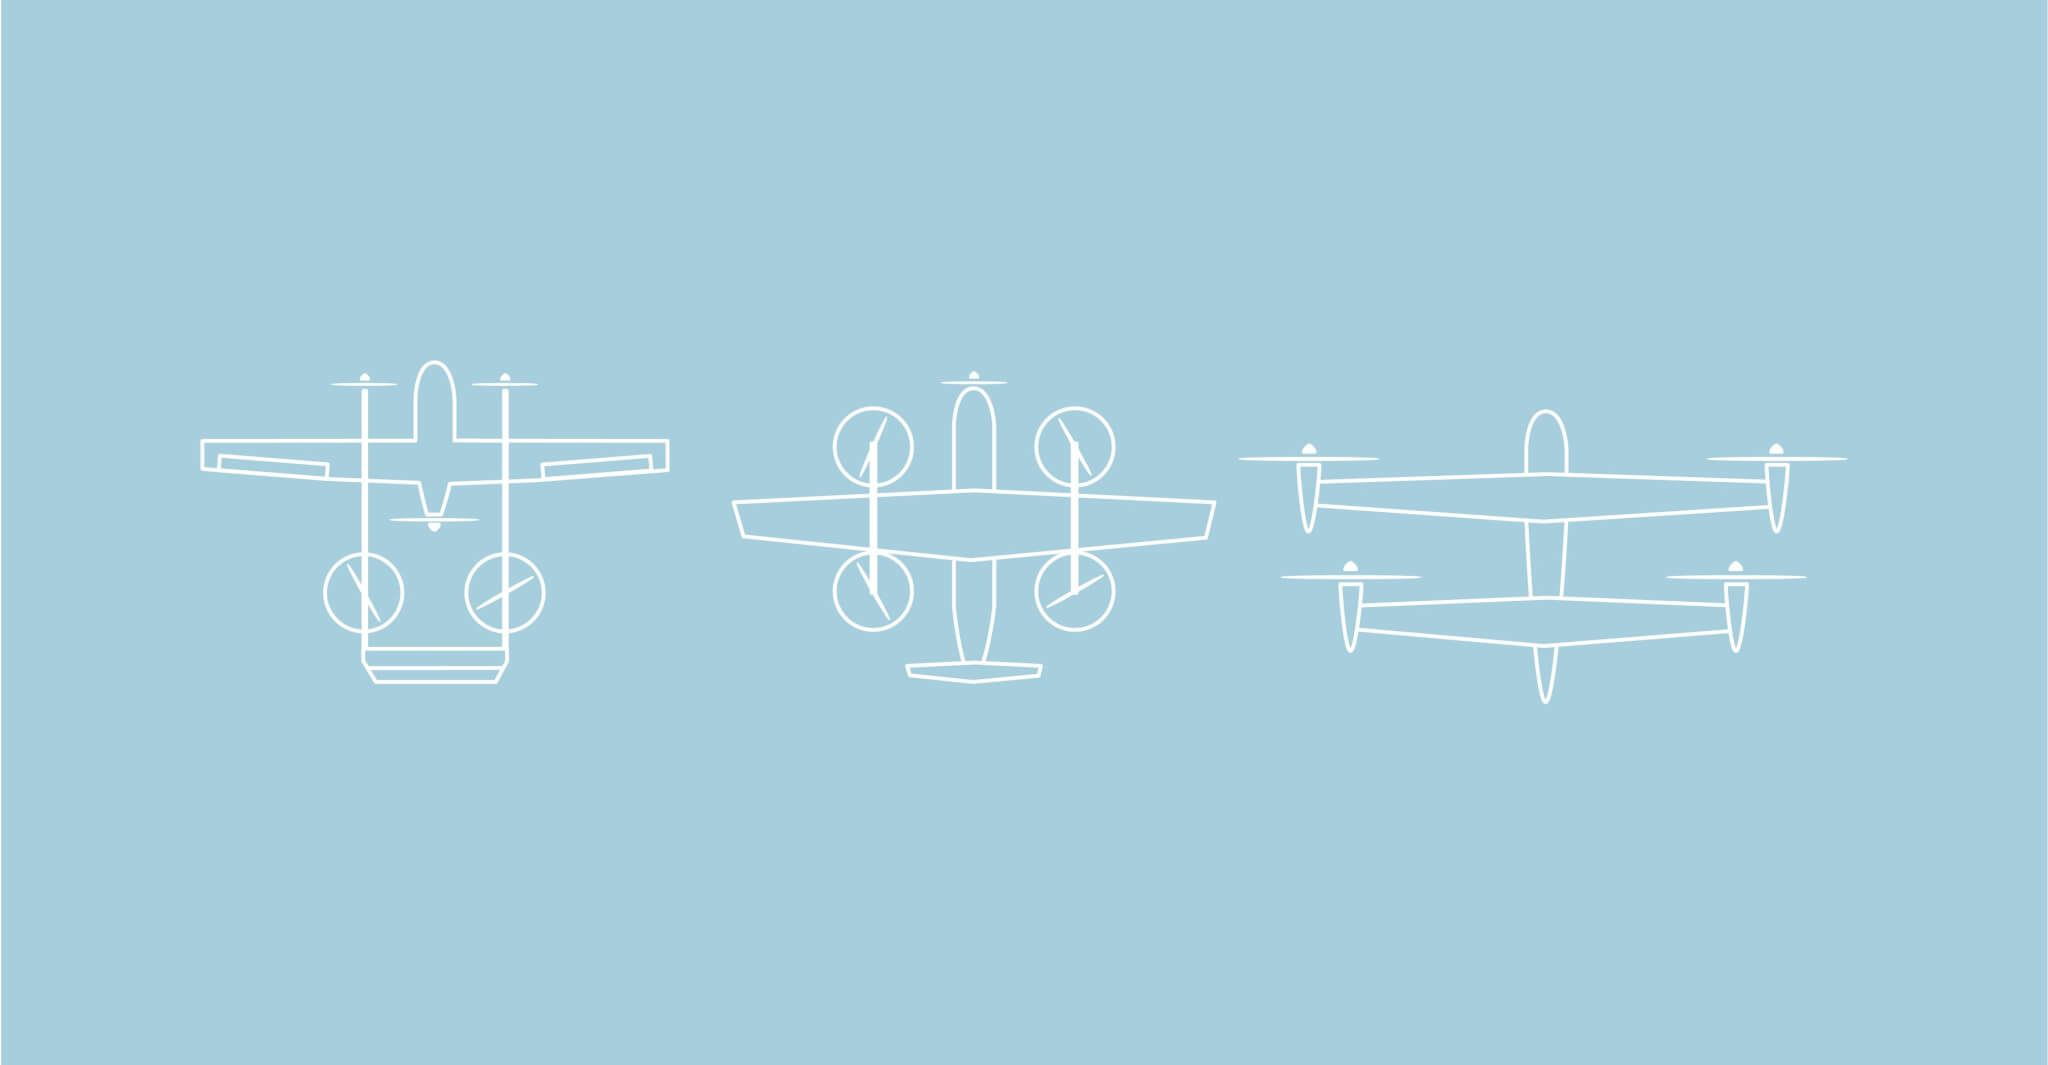 Types of quadplanes